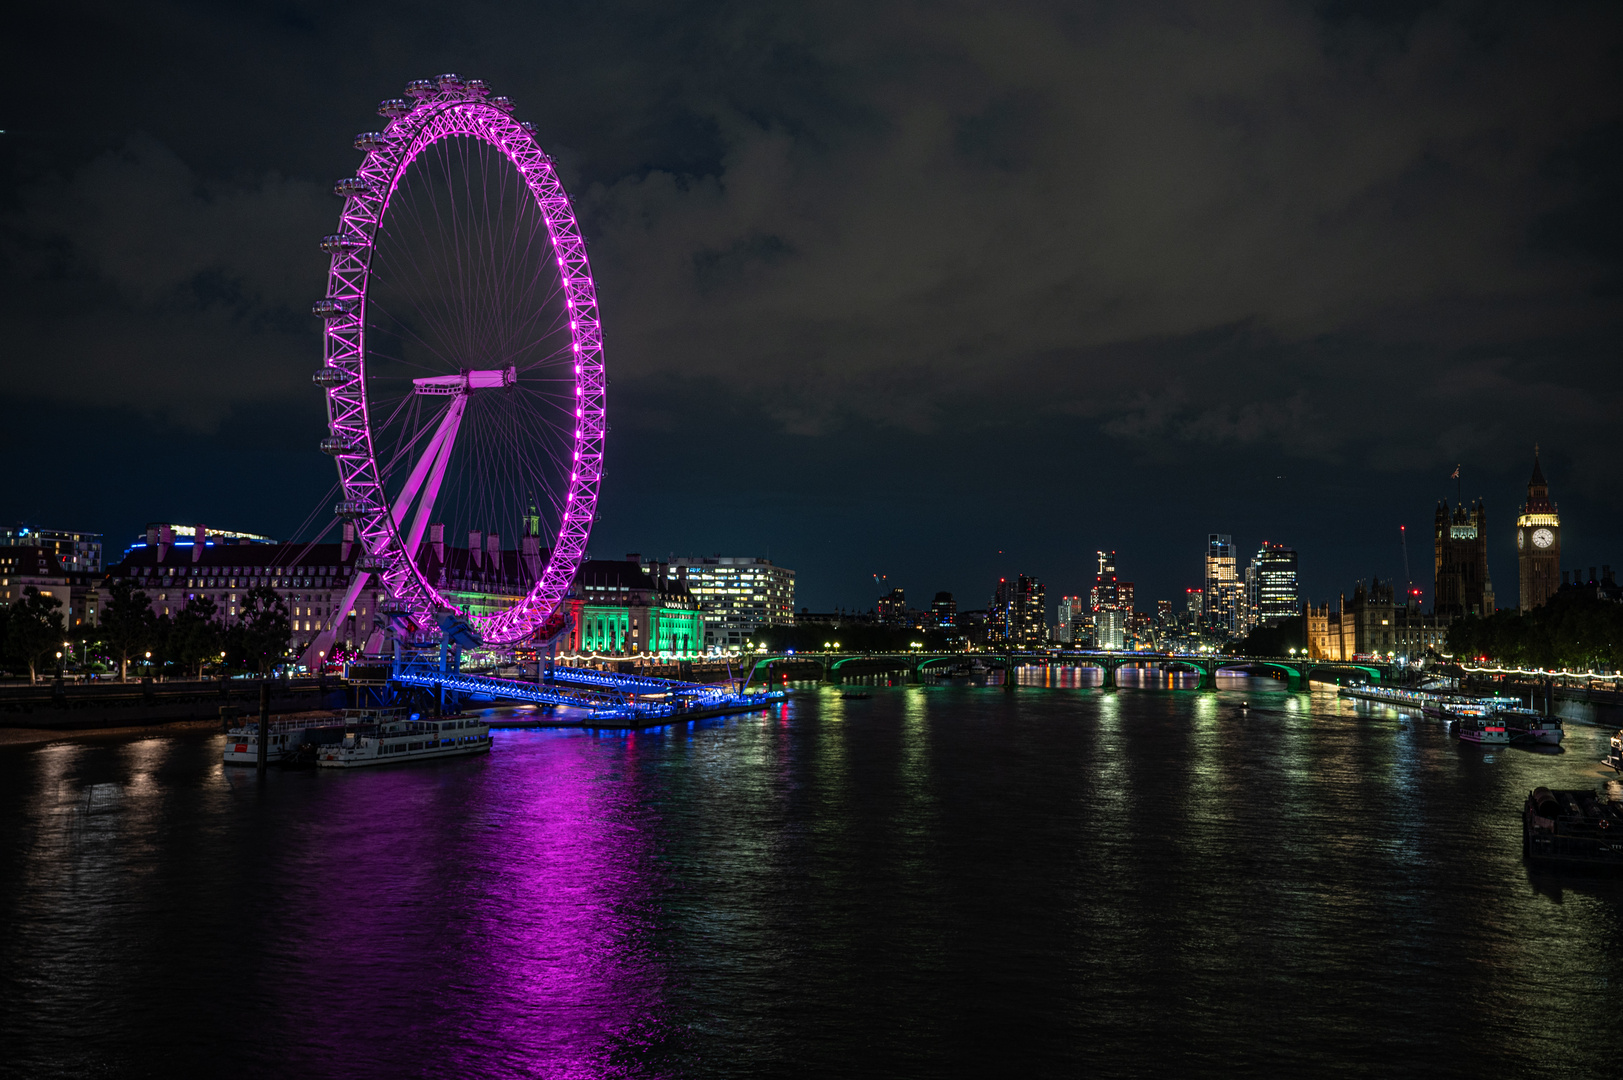 London by night - Part III